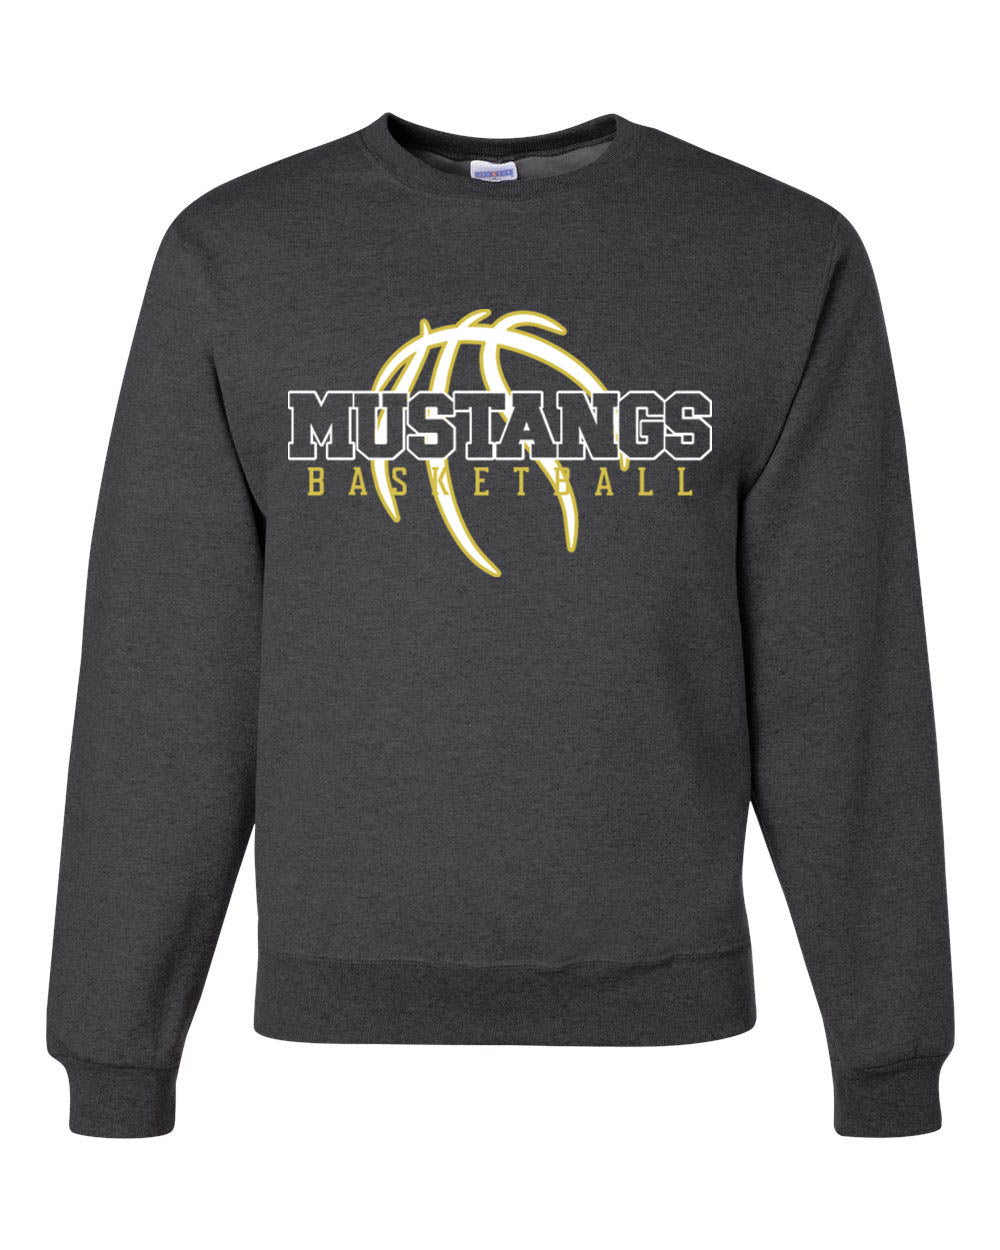 Green Hills Basketball Design 5 non hooded sweatshirt